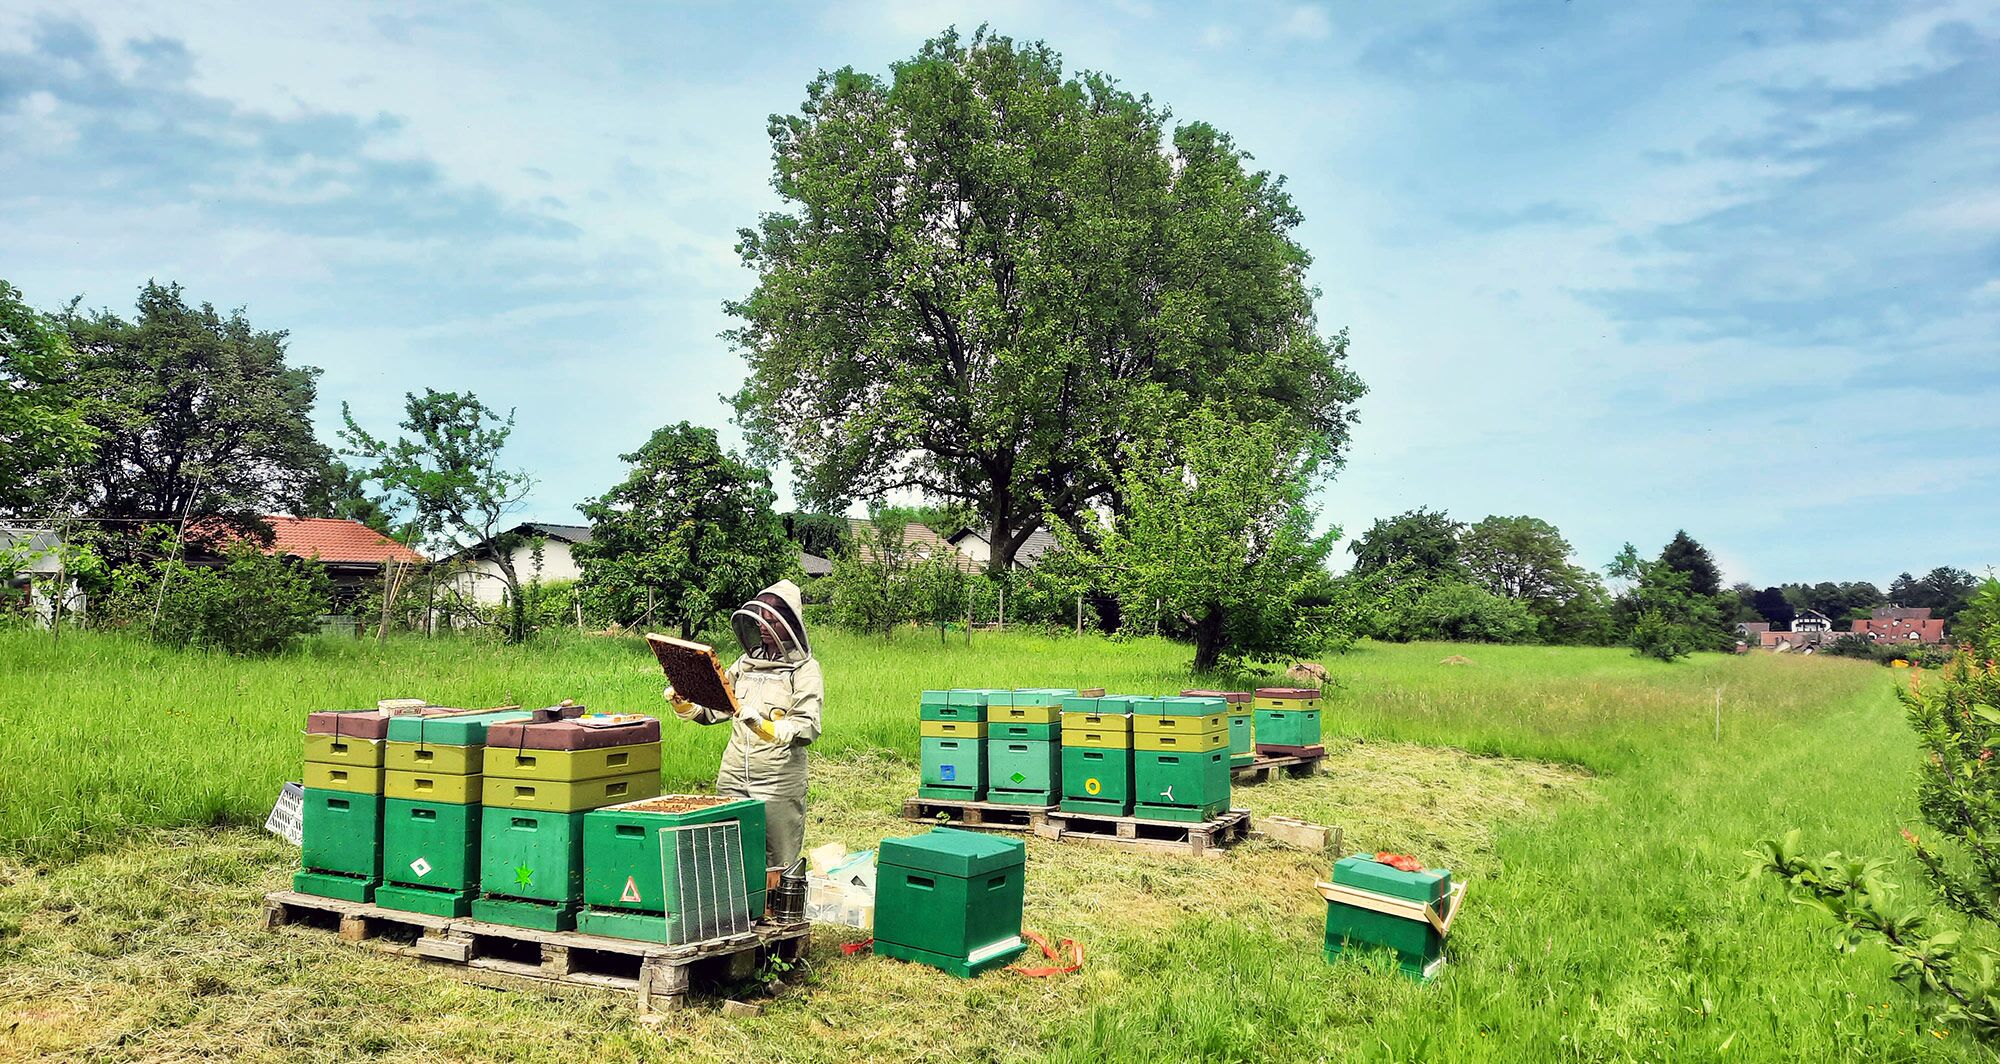 Reblandhonig Beekeeping - Honey from Baden-Baden / Neuweier at the foot of the Black Forest